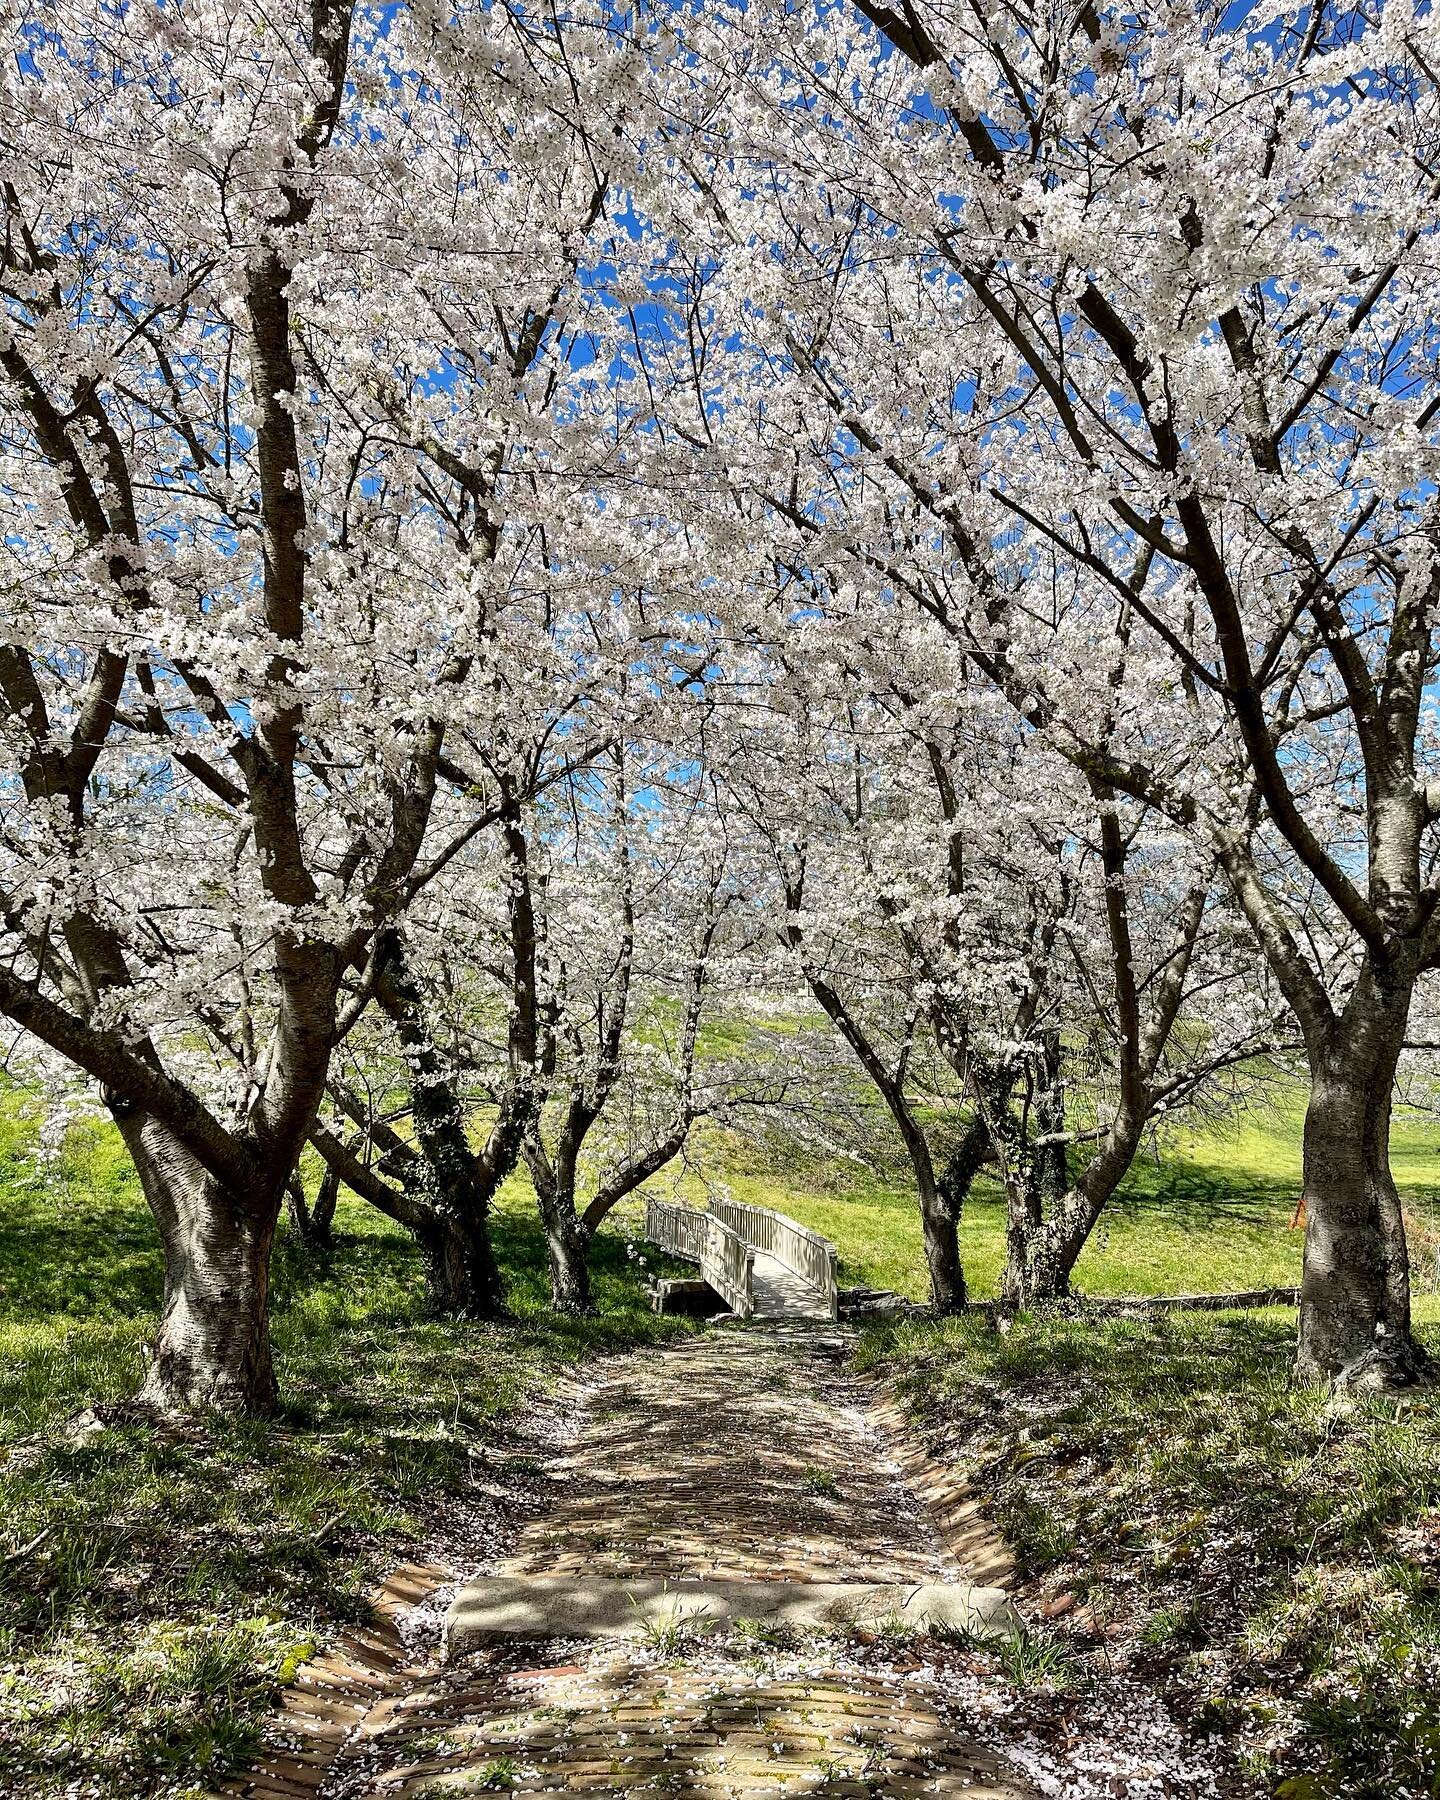 Spring time in poplarlawn. 
#poplarlawn #sping #historicdistrict #flowers #park
#cherryblossom #petersburgva